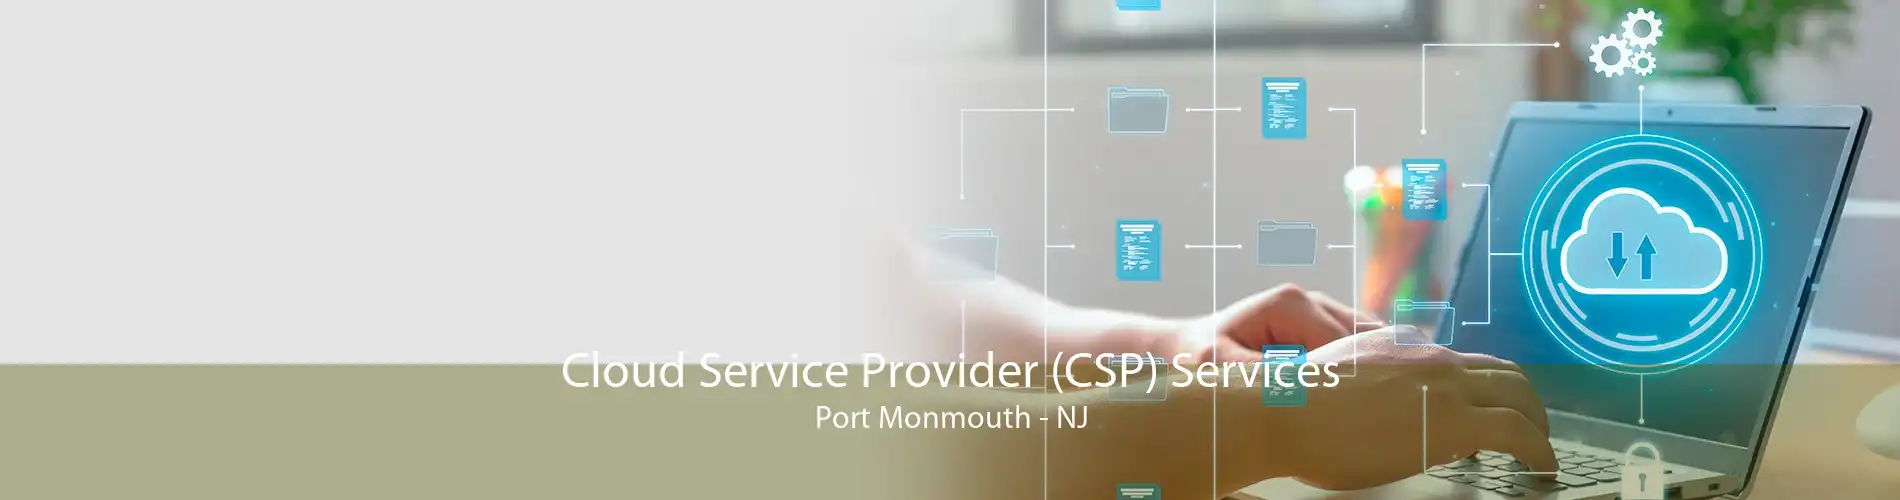 Cloud Service Provider (CSP) Services Port Monmouth - NJ